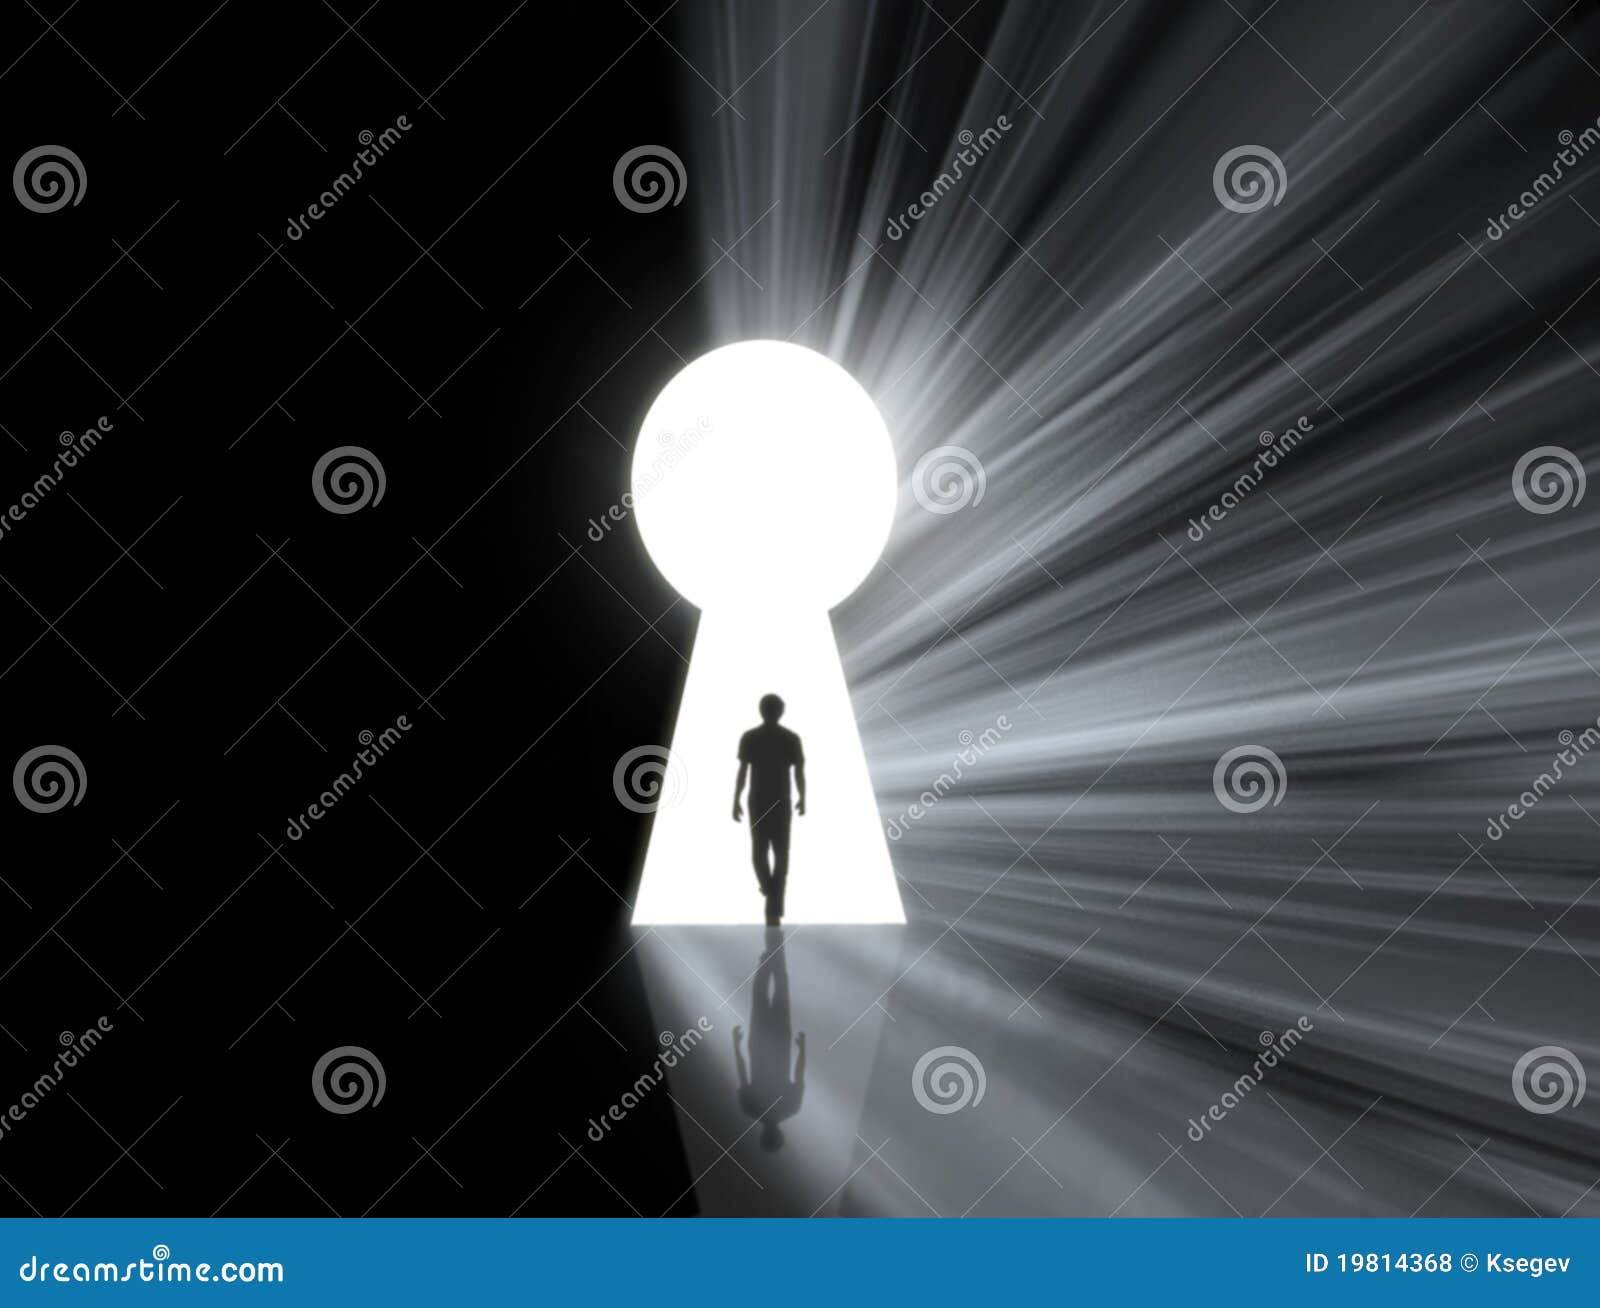 man walking into a keyhole